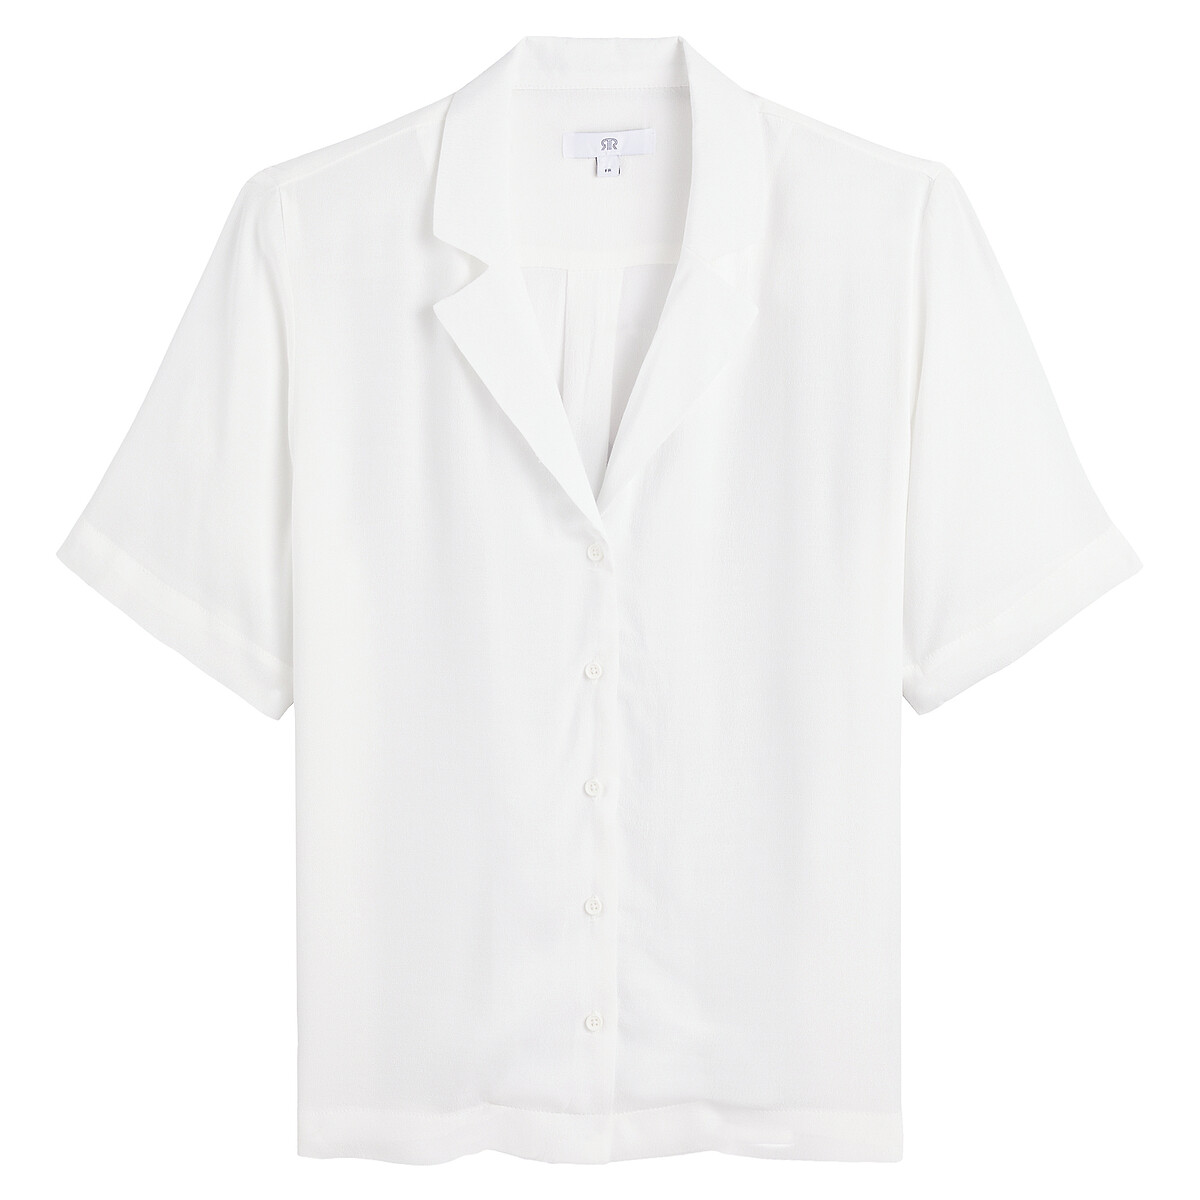 Рубашка С пижамным воротником и короткими рукавами 50 (FR) - 56 (RUS) белый LaRedoute, размер 50 (FR) - 56 (RUS) Рубашка С пижамным воротником и короткими рукавами 50 (FR) - 56 (RUS) белый - фото 5